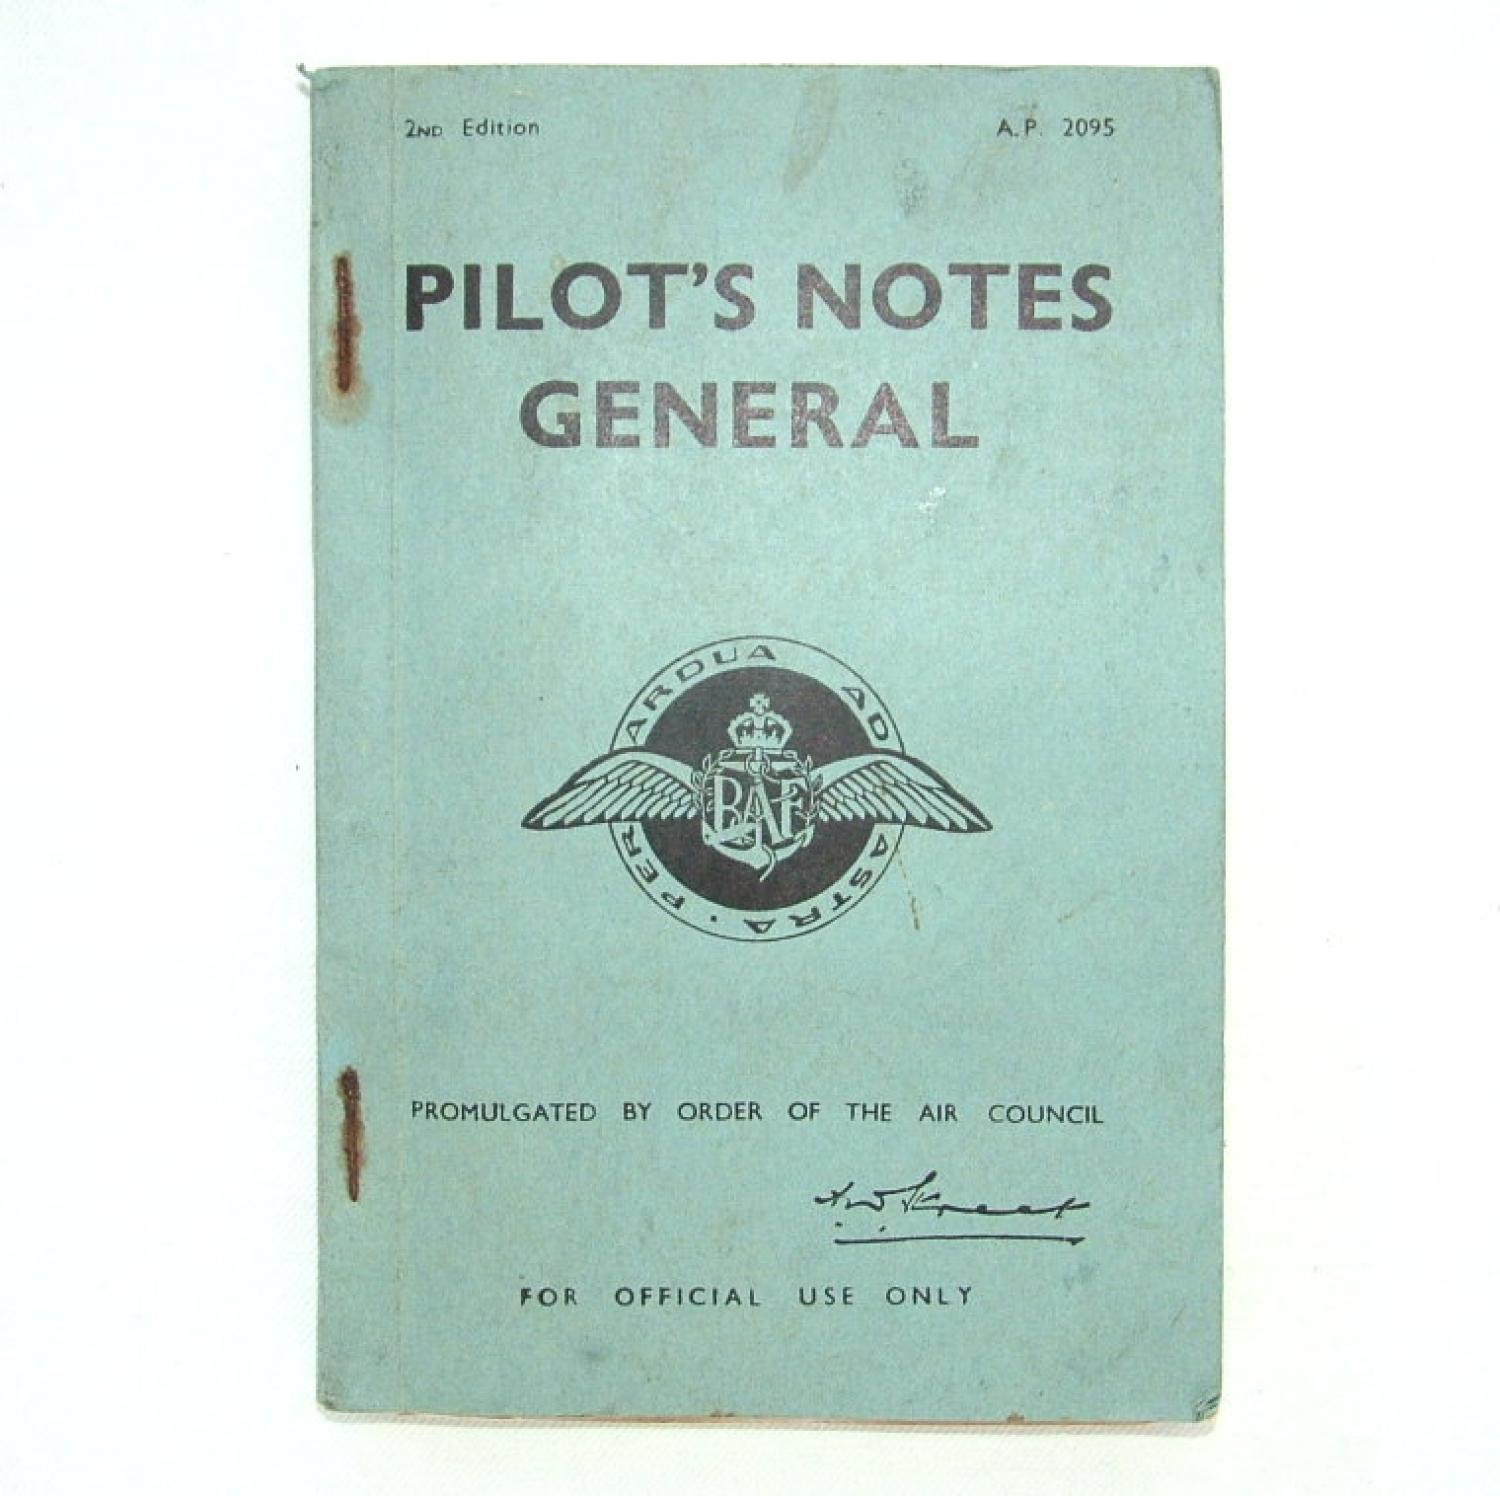 Pilot's Notes General, 1943